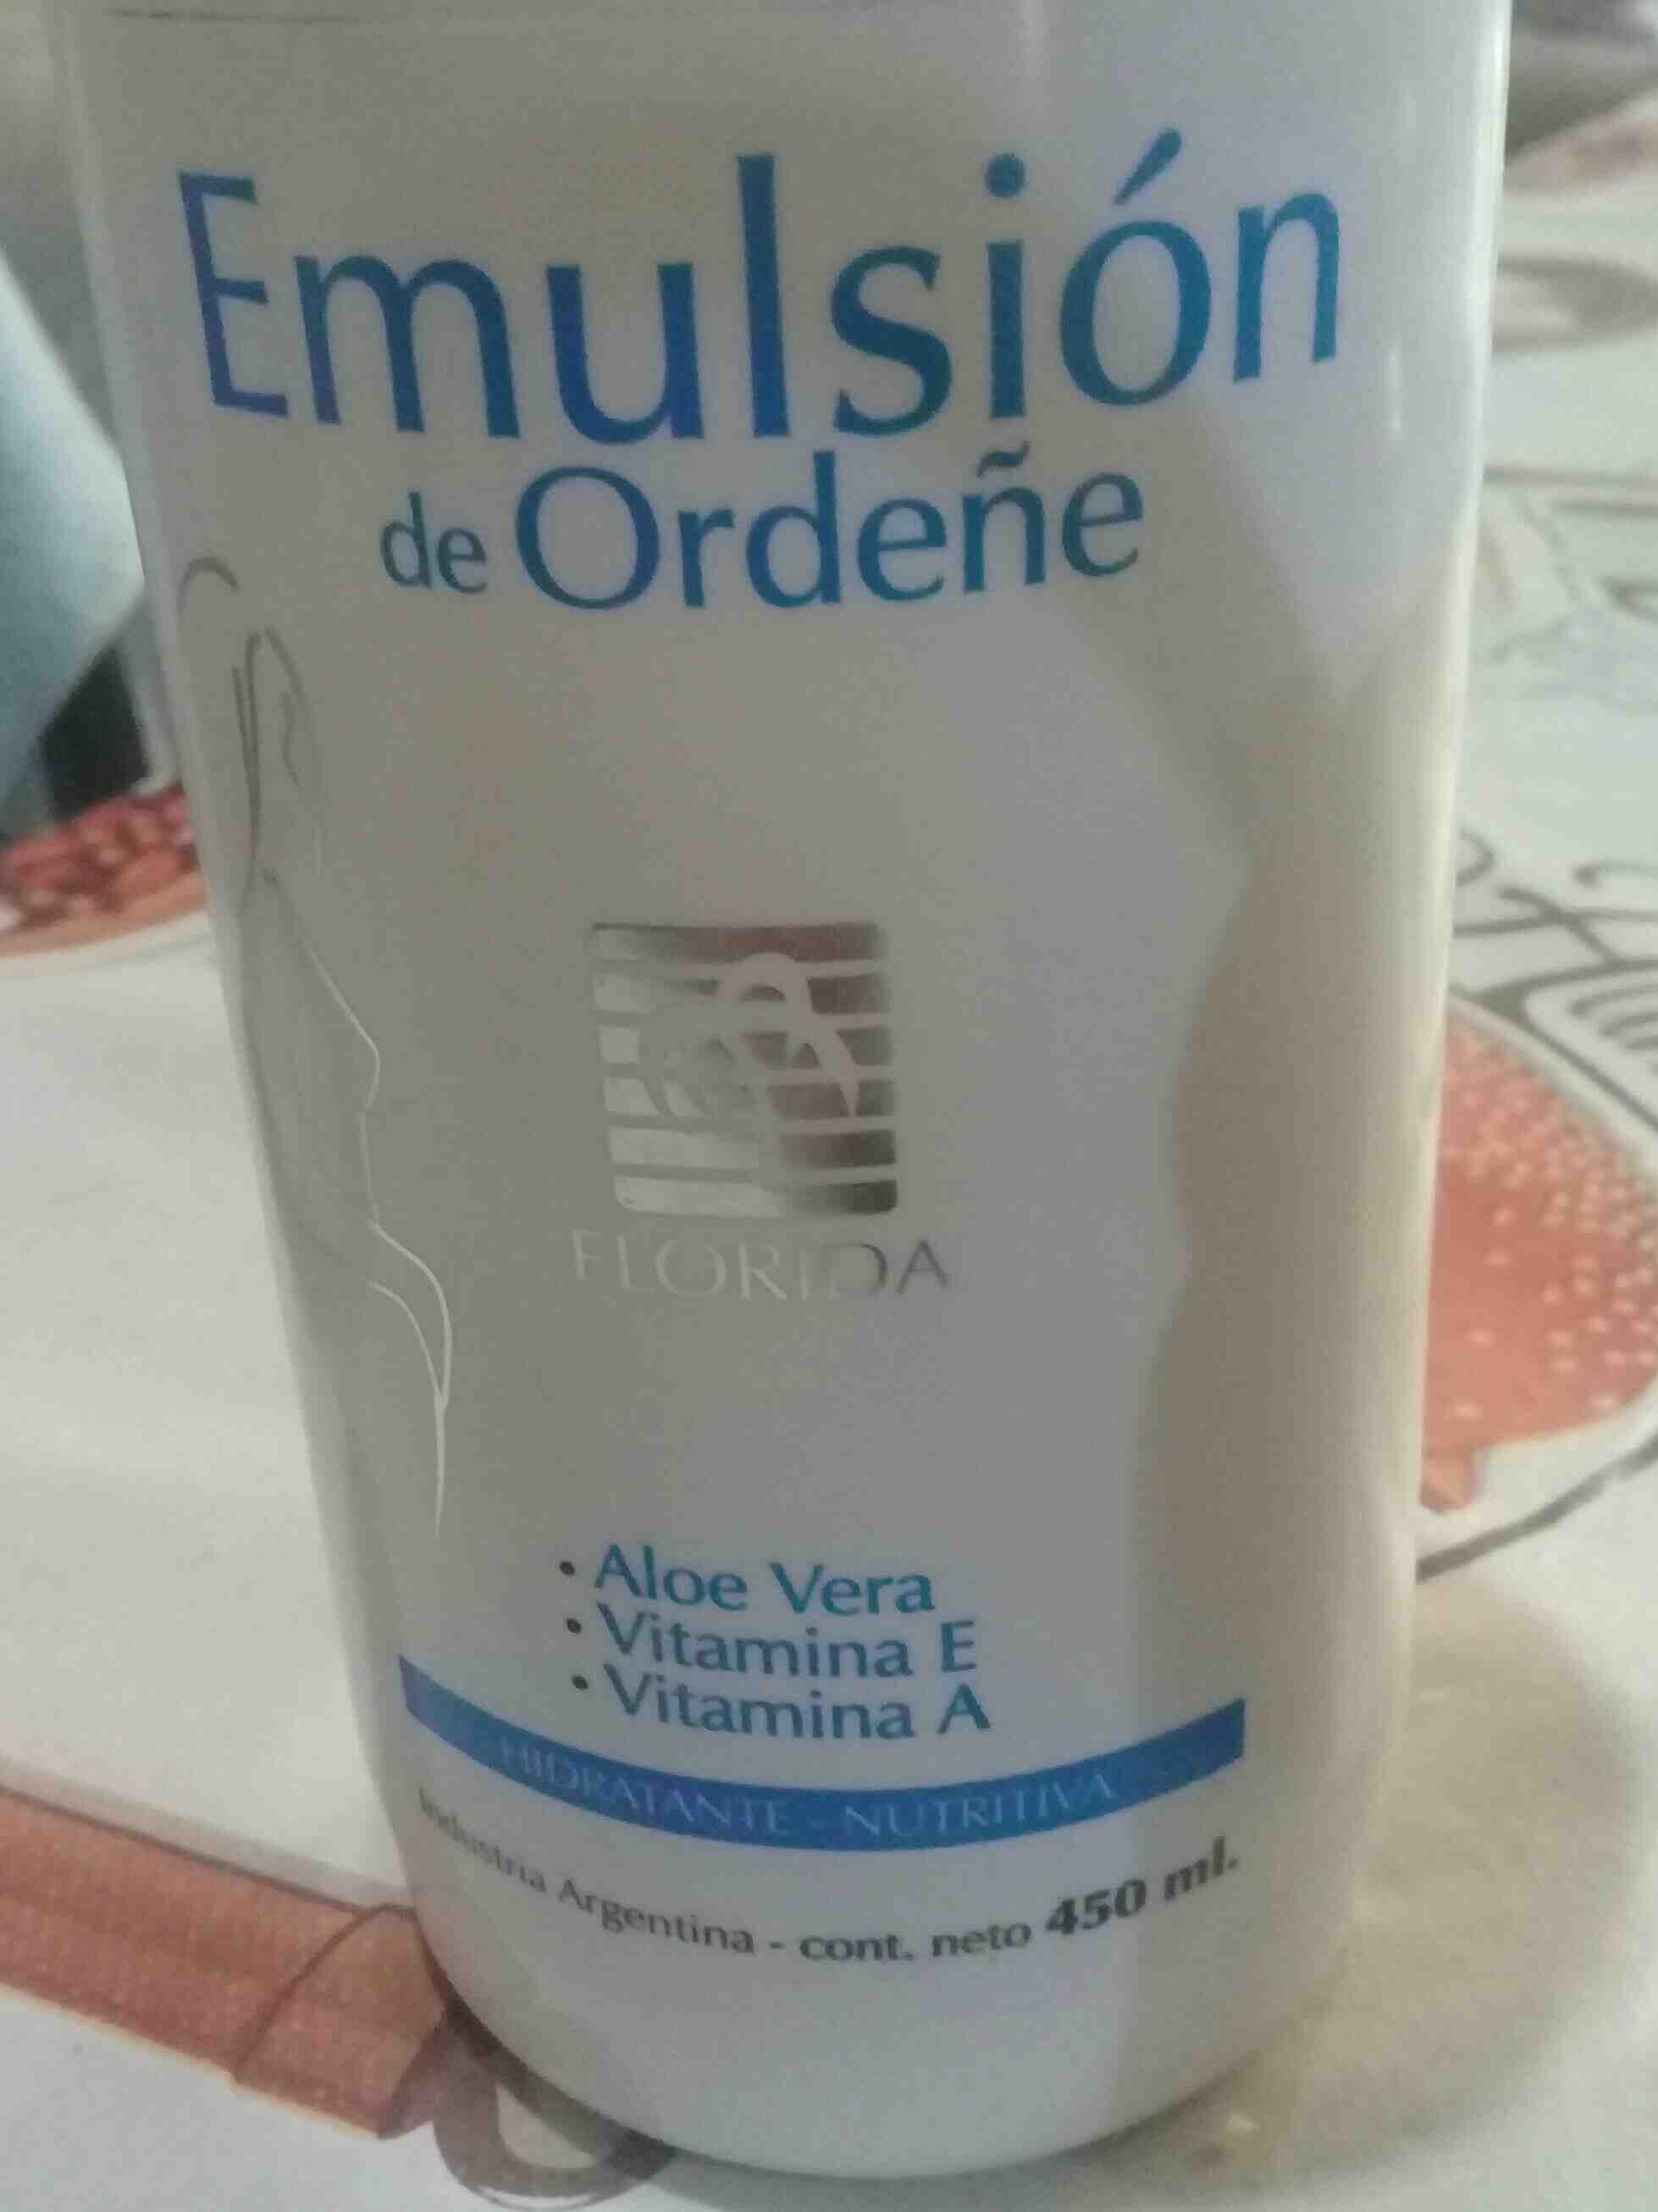 Emulsion de Ordeñe - Produto - en